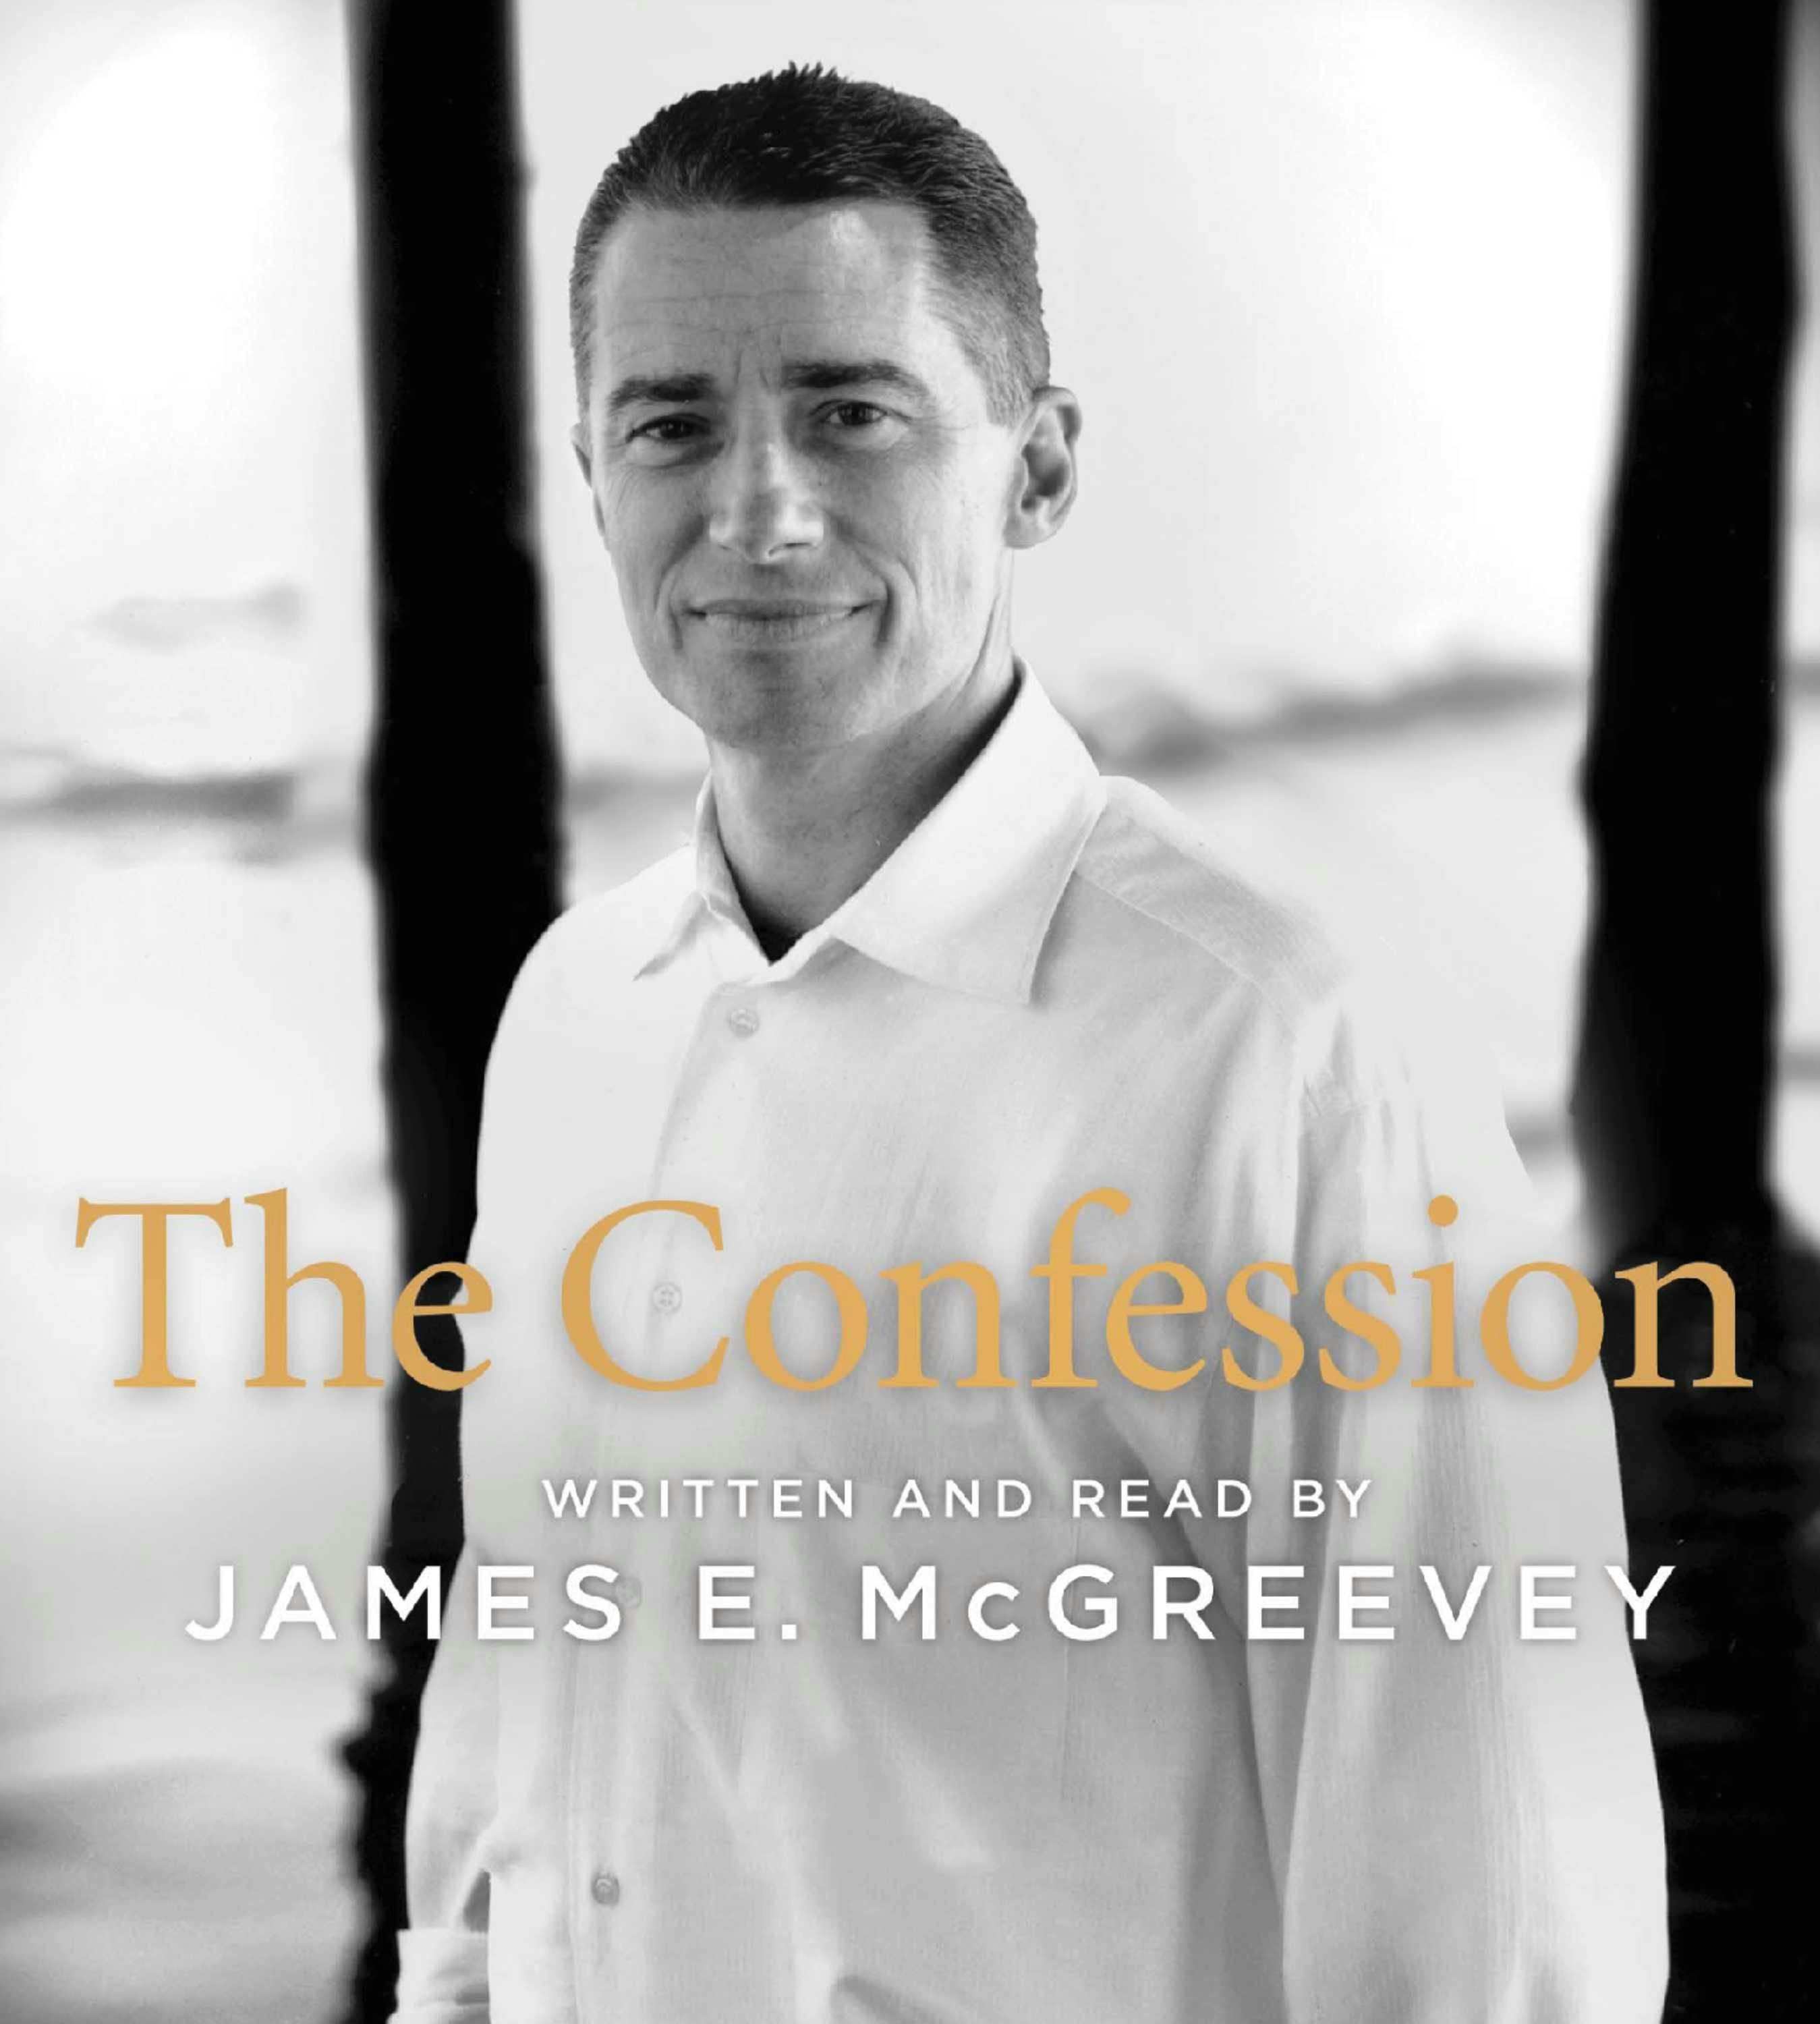 The Confession - James E. McGreevey